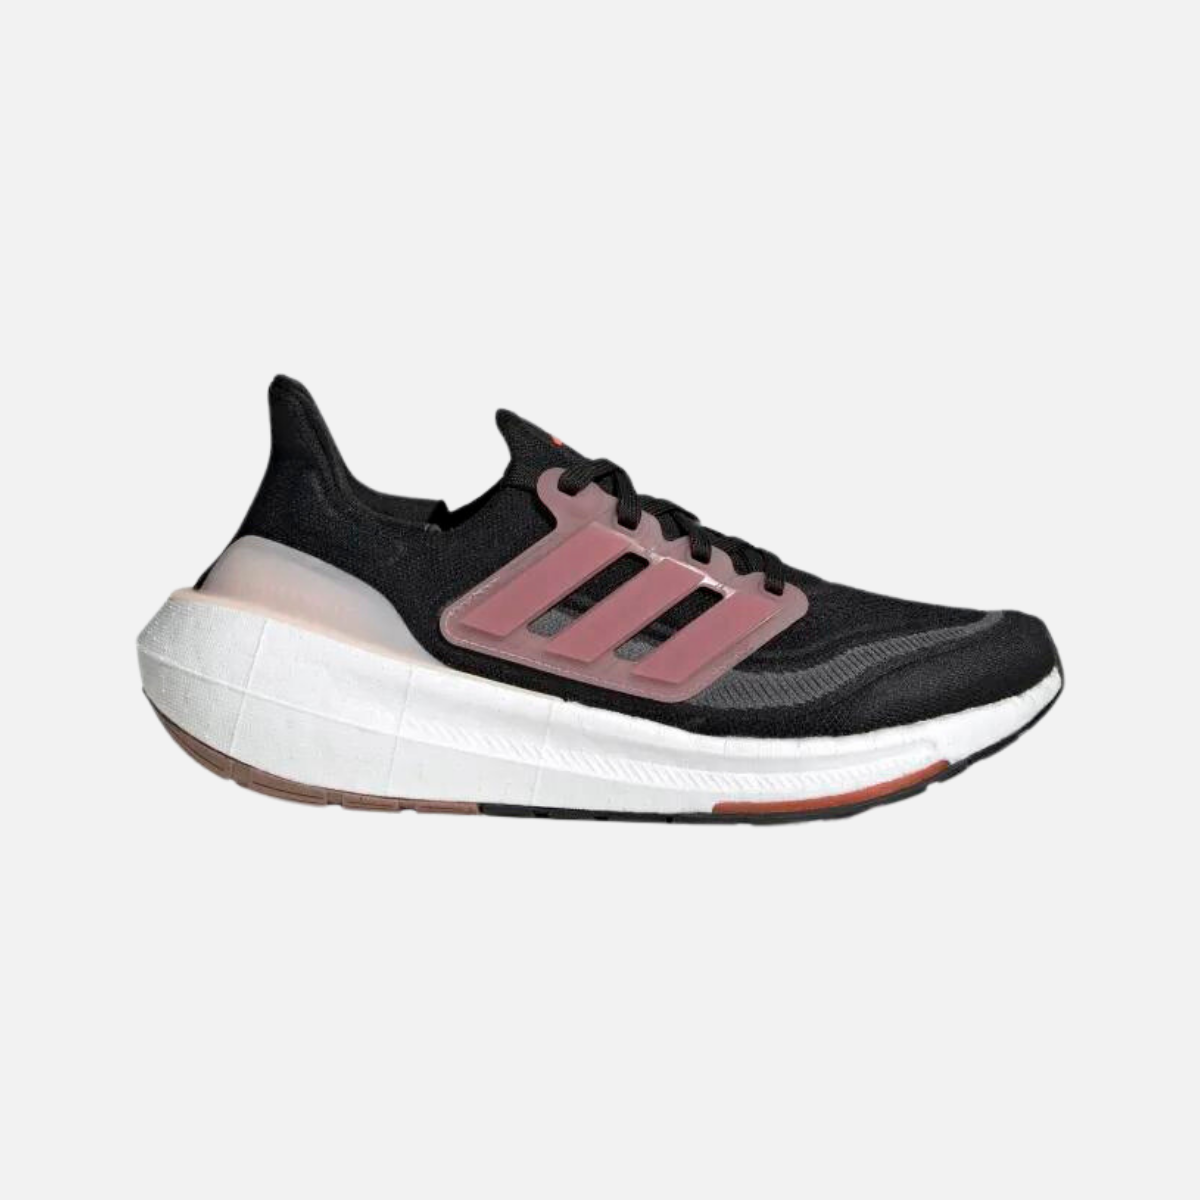 Adidas Ultraboost Light Women running Shoes -Core Black/Pink Strata/Grey Six